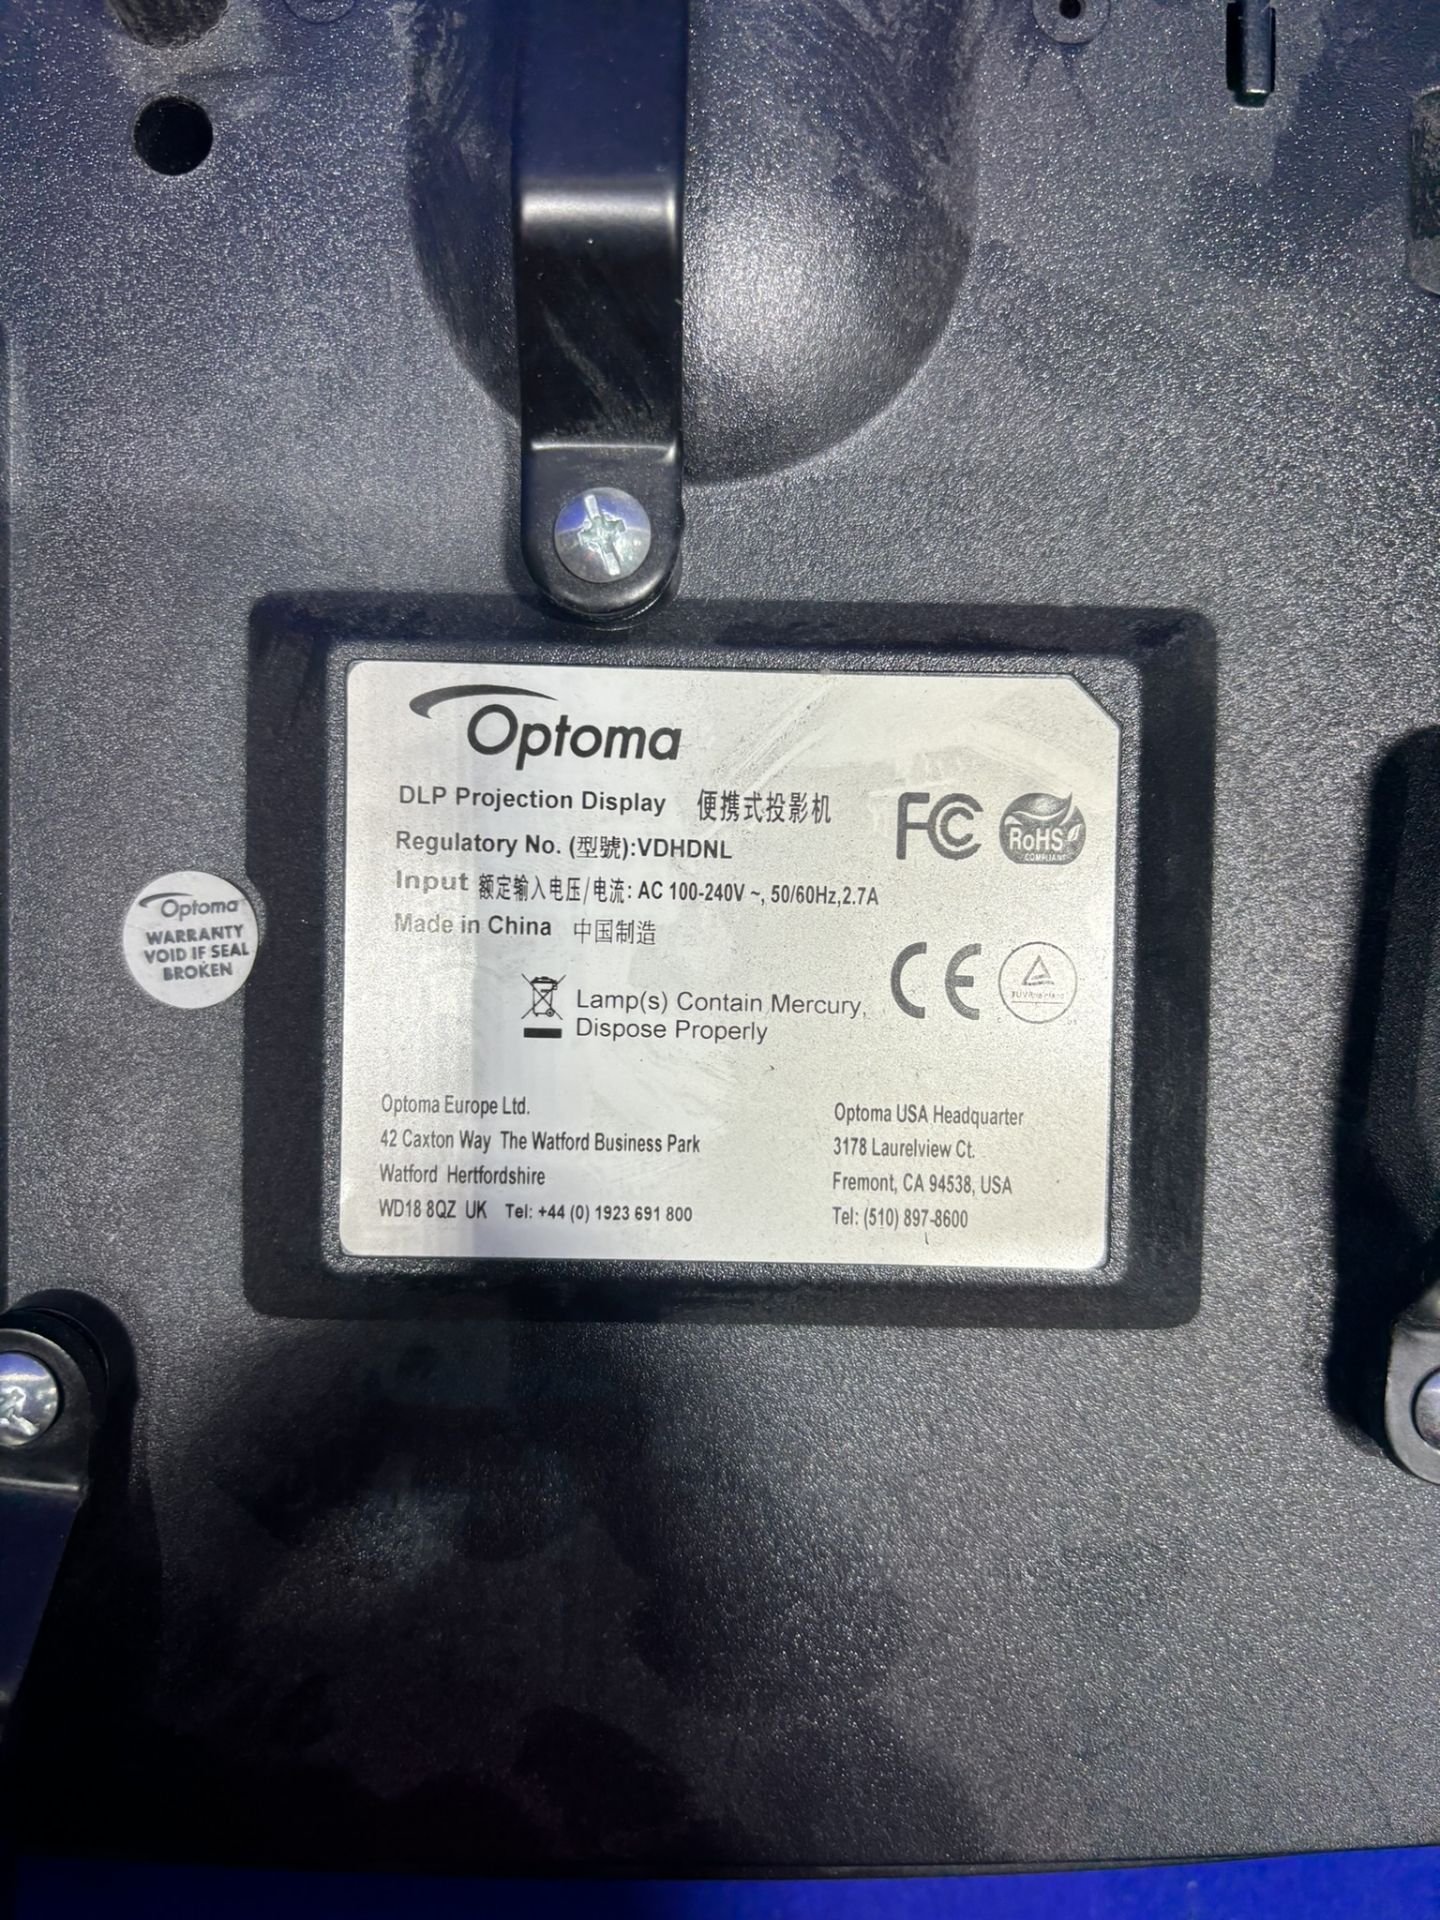 Optoma VDHDNL HDMI DLP Projector - Image 8 of 8